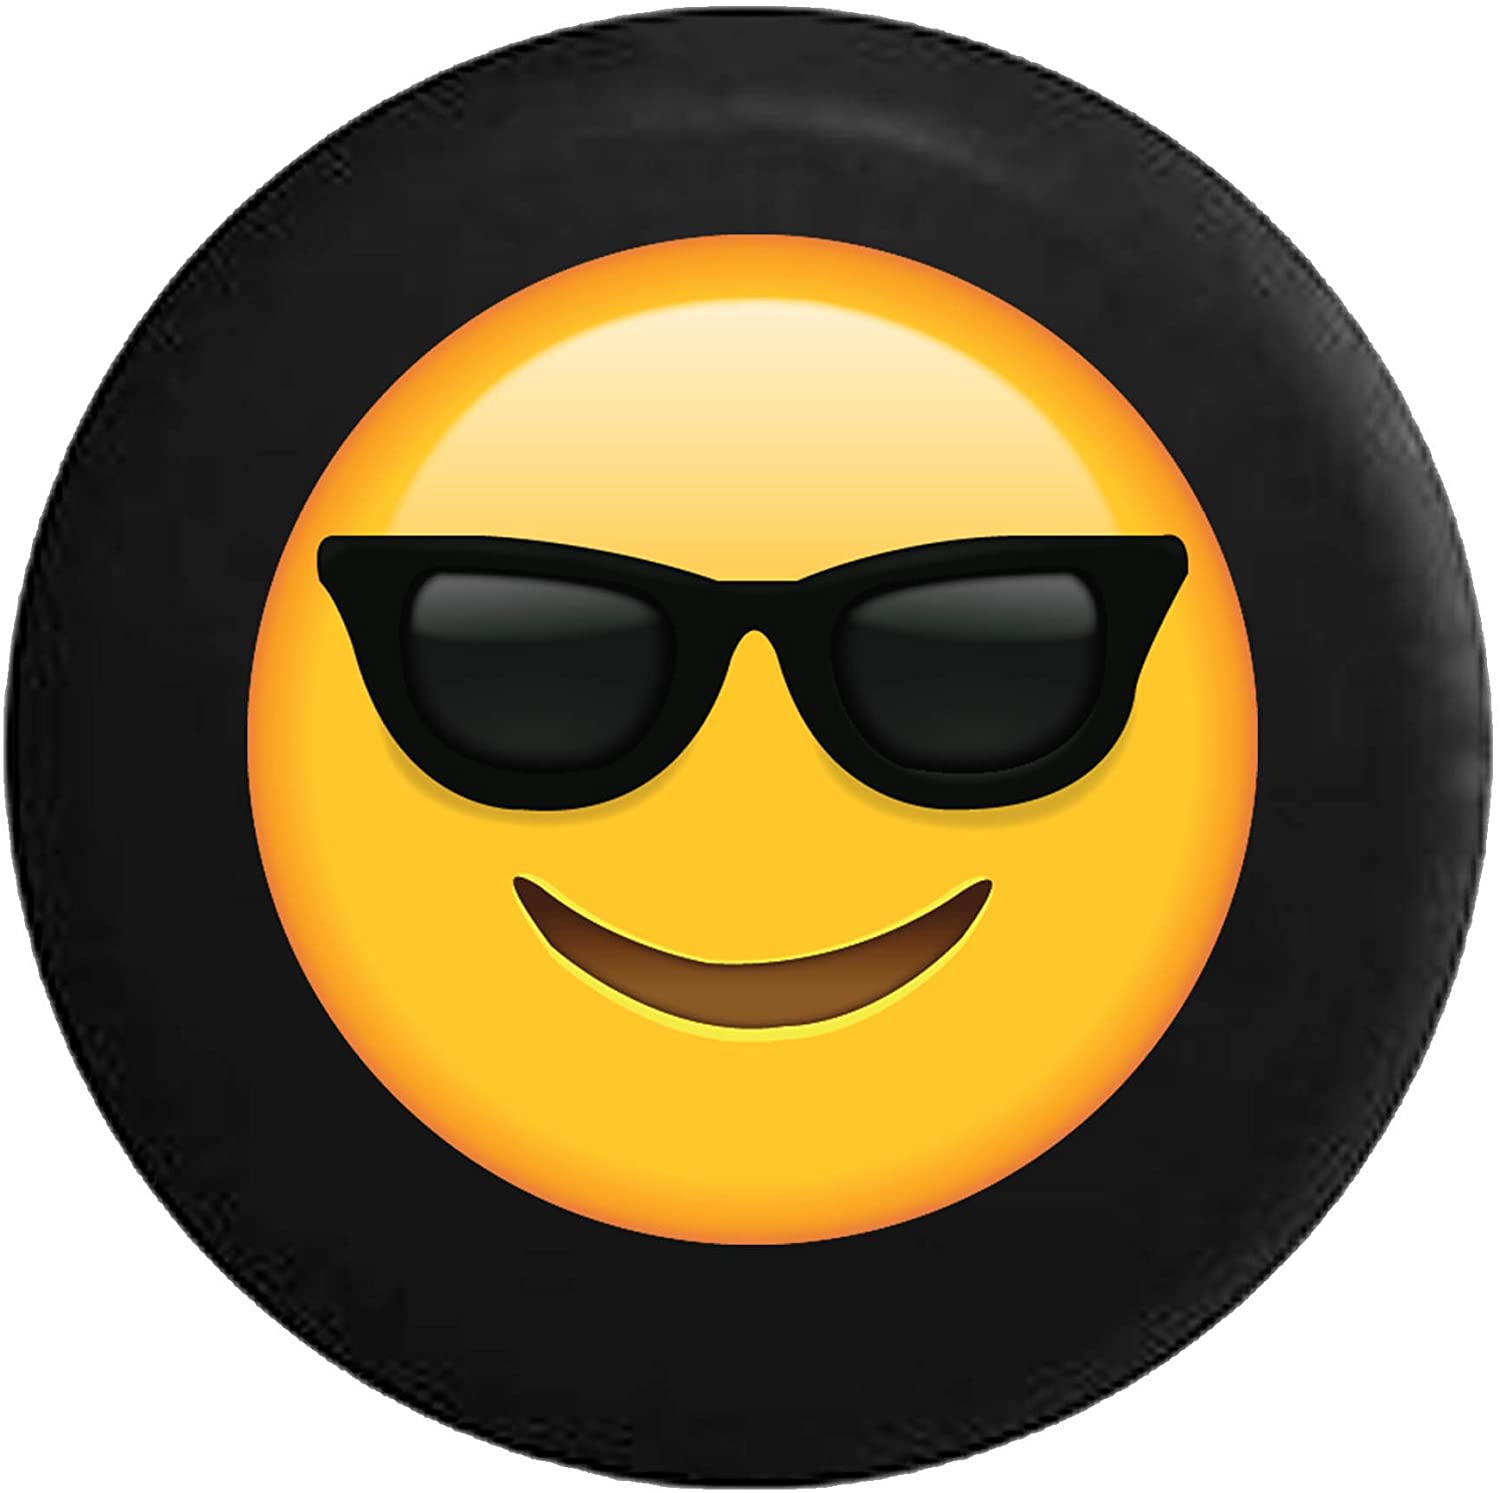 Sunglasses Emoji Wallpapers - Wallpaper Cave